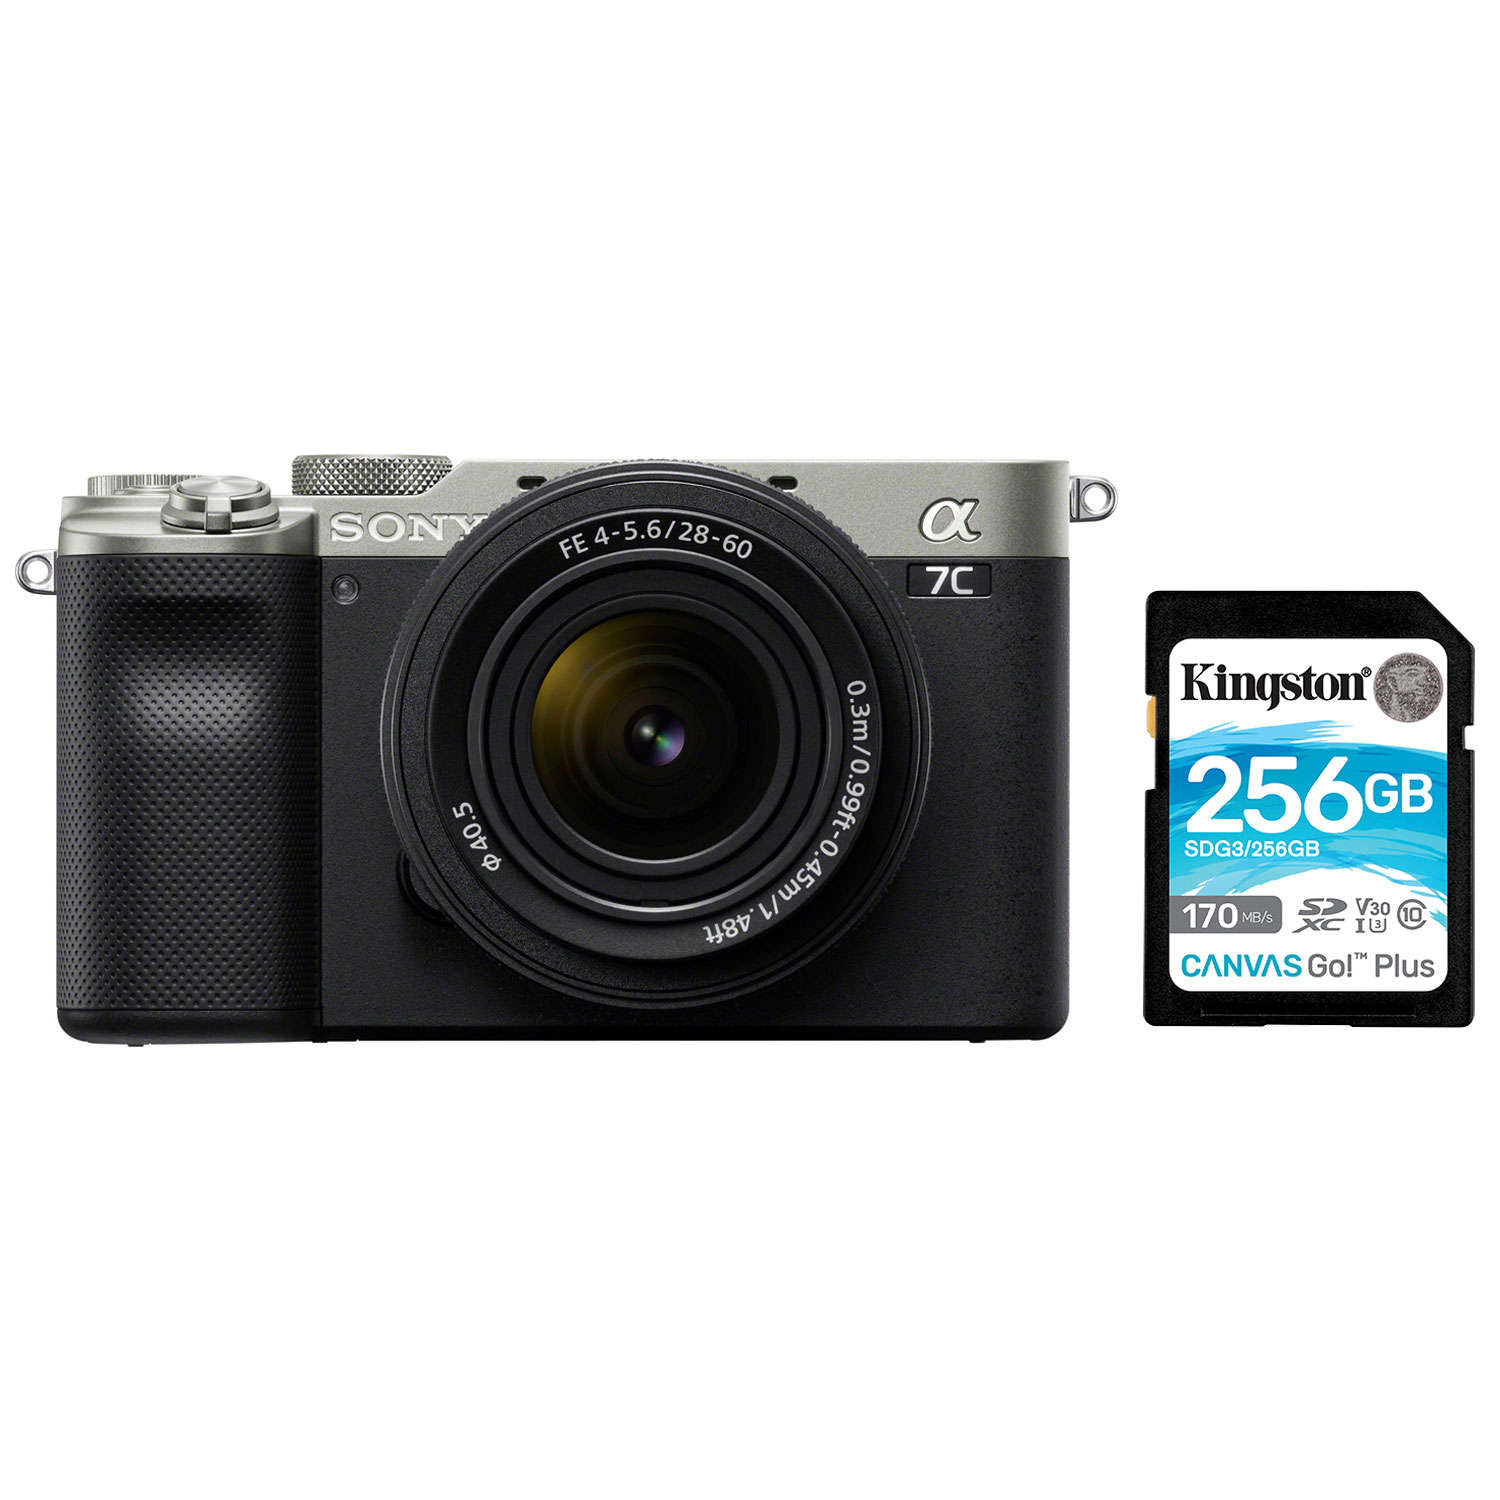 Sony Alpha 7C Full-Frame Mirrorless Camera with 28-60mm Lens Kit 